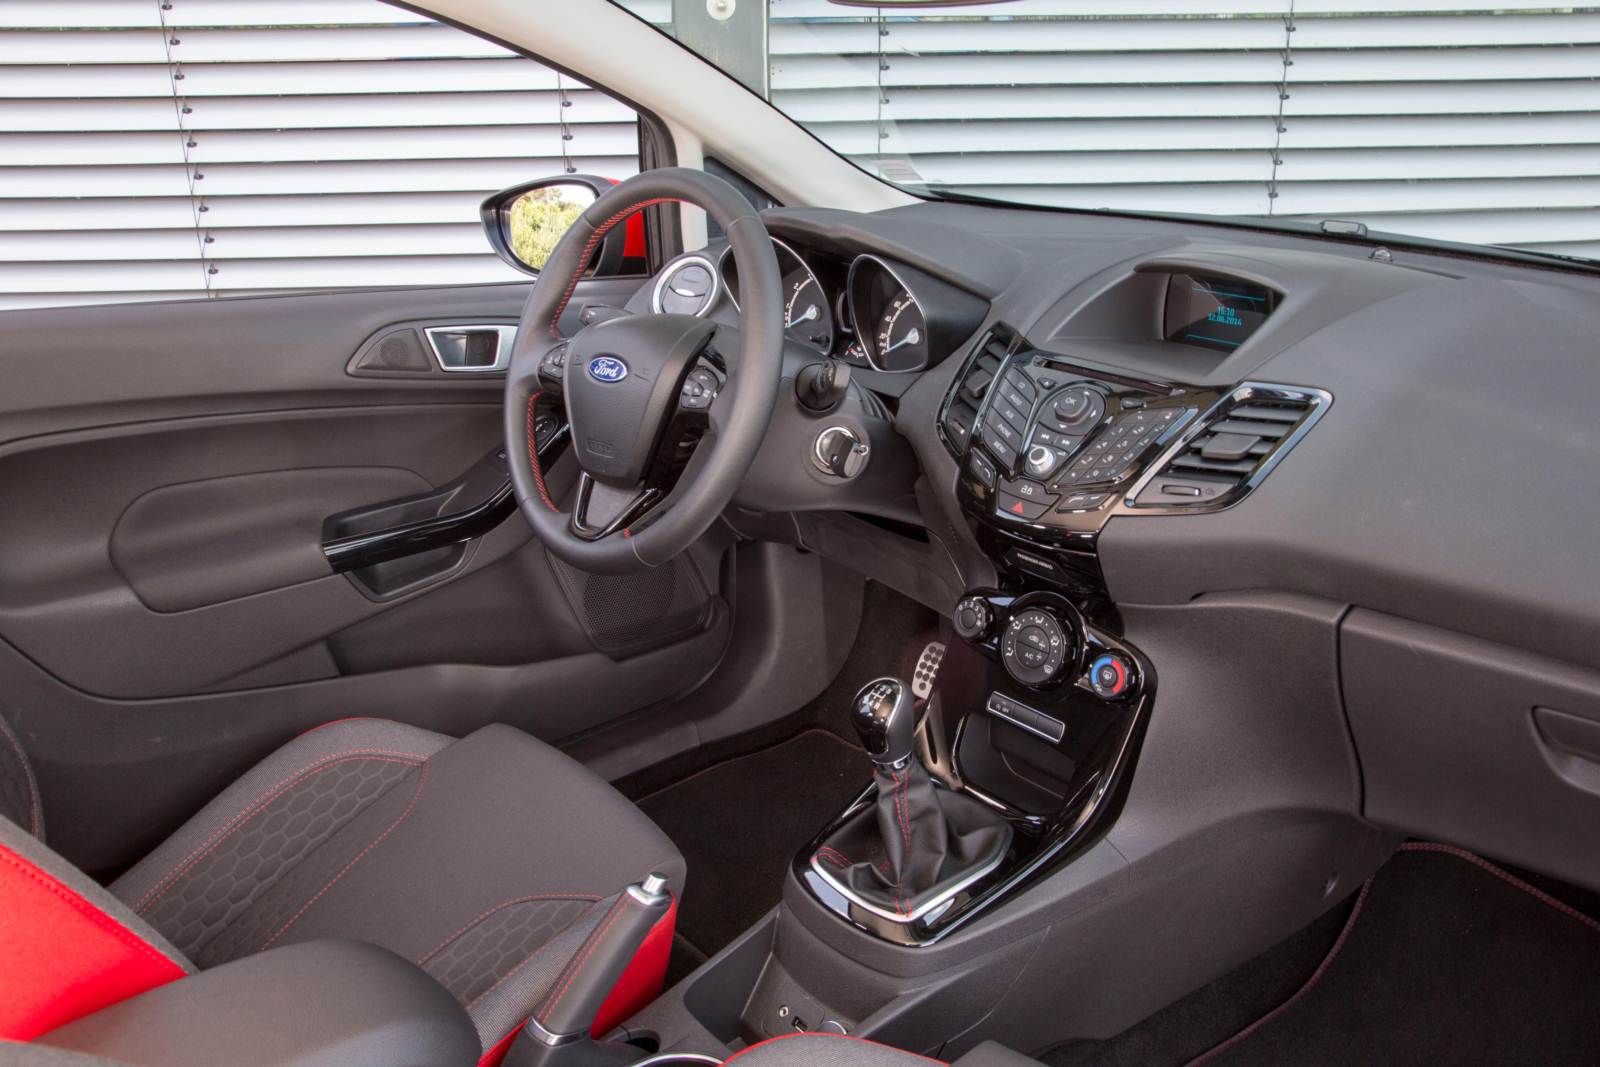 Novo Ford Fiesta Red & Black 1.0 Turbo 140 cavalos - interior